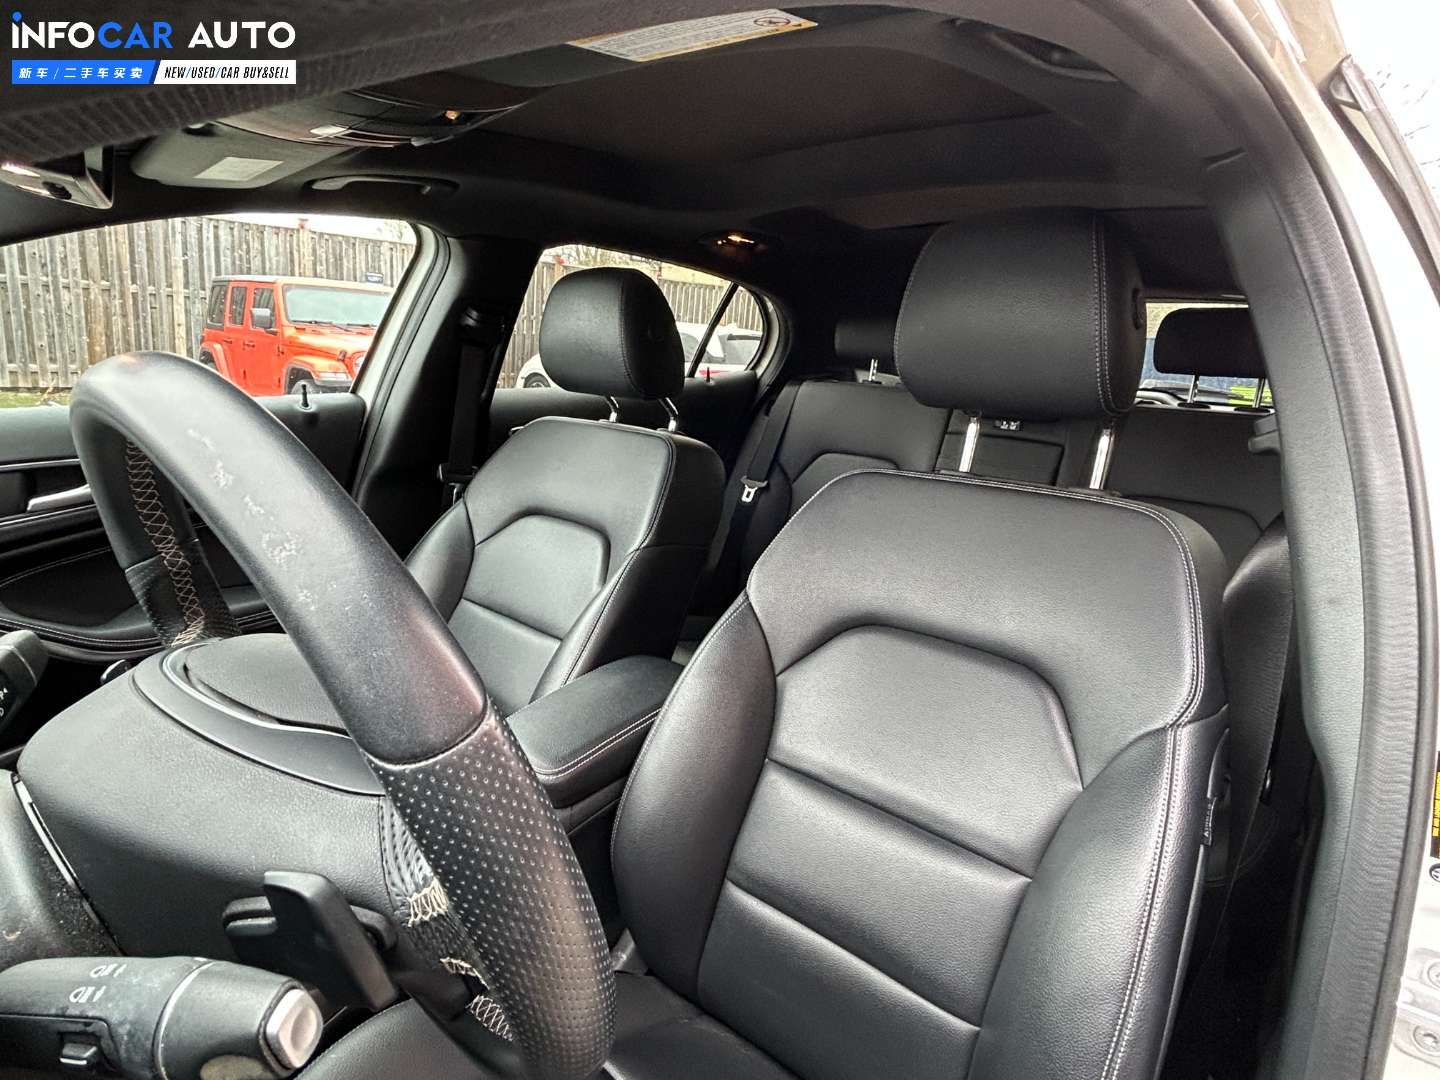 2020 Audi A5 SPORTBACK - INFOCAR - Toronto Auto Trading Platform